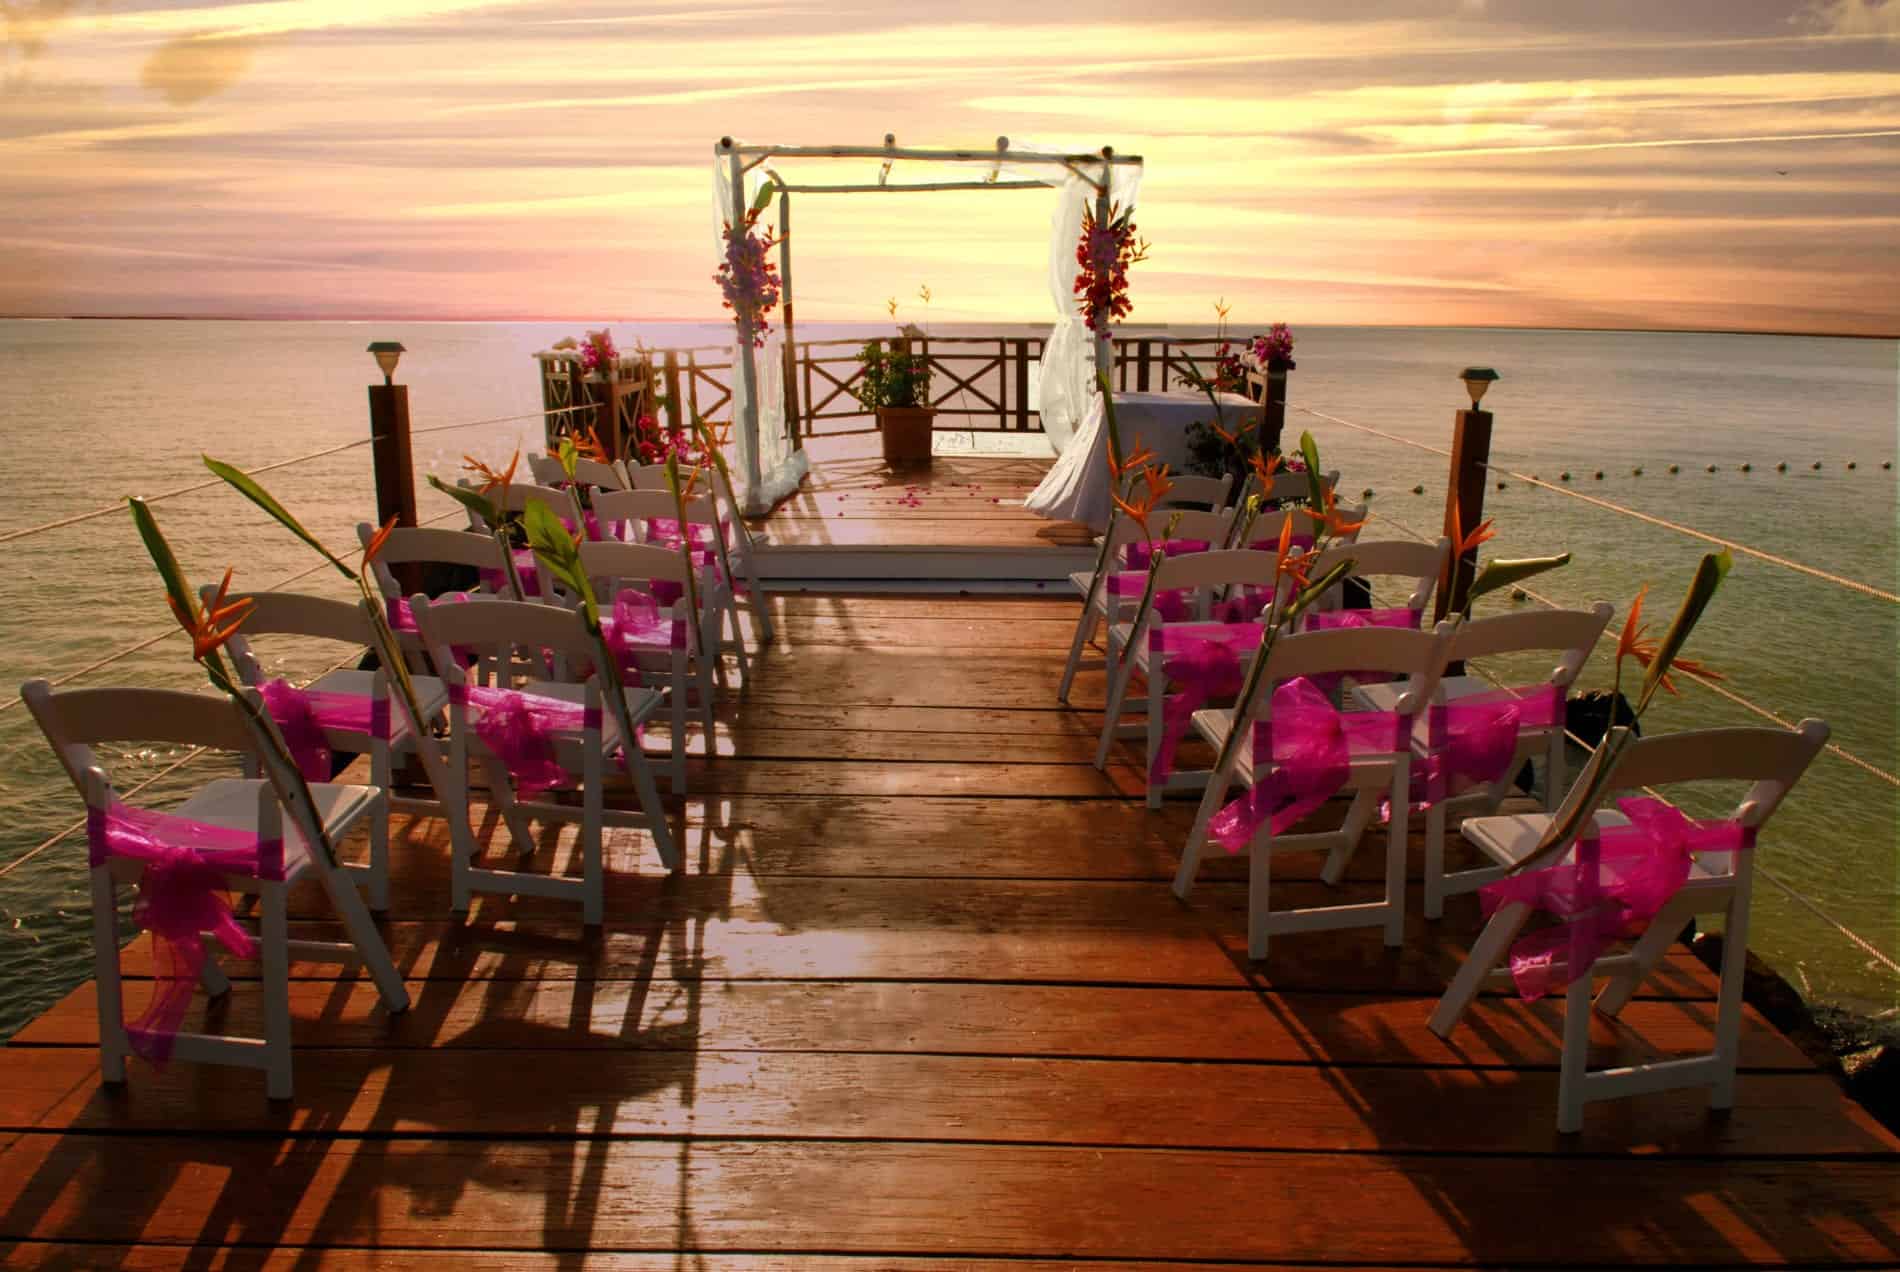 Destination wedding at sunset